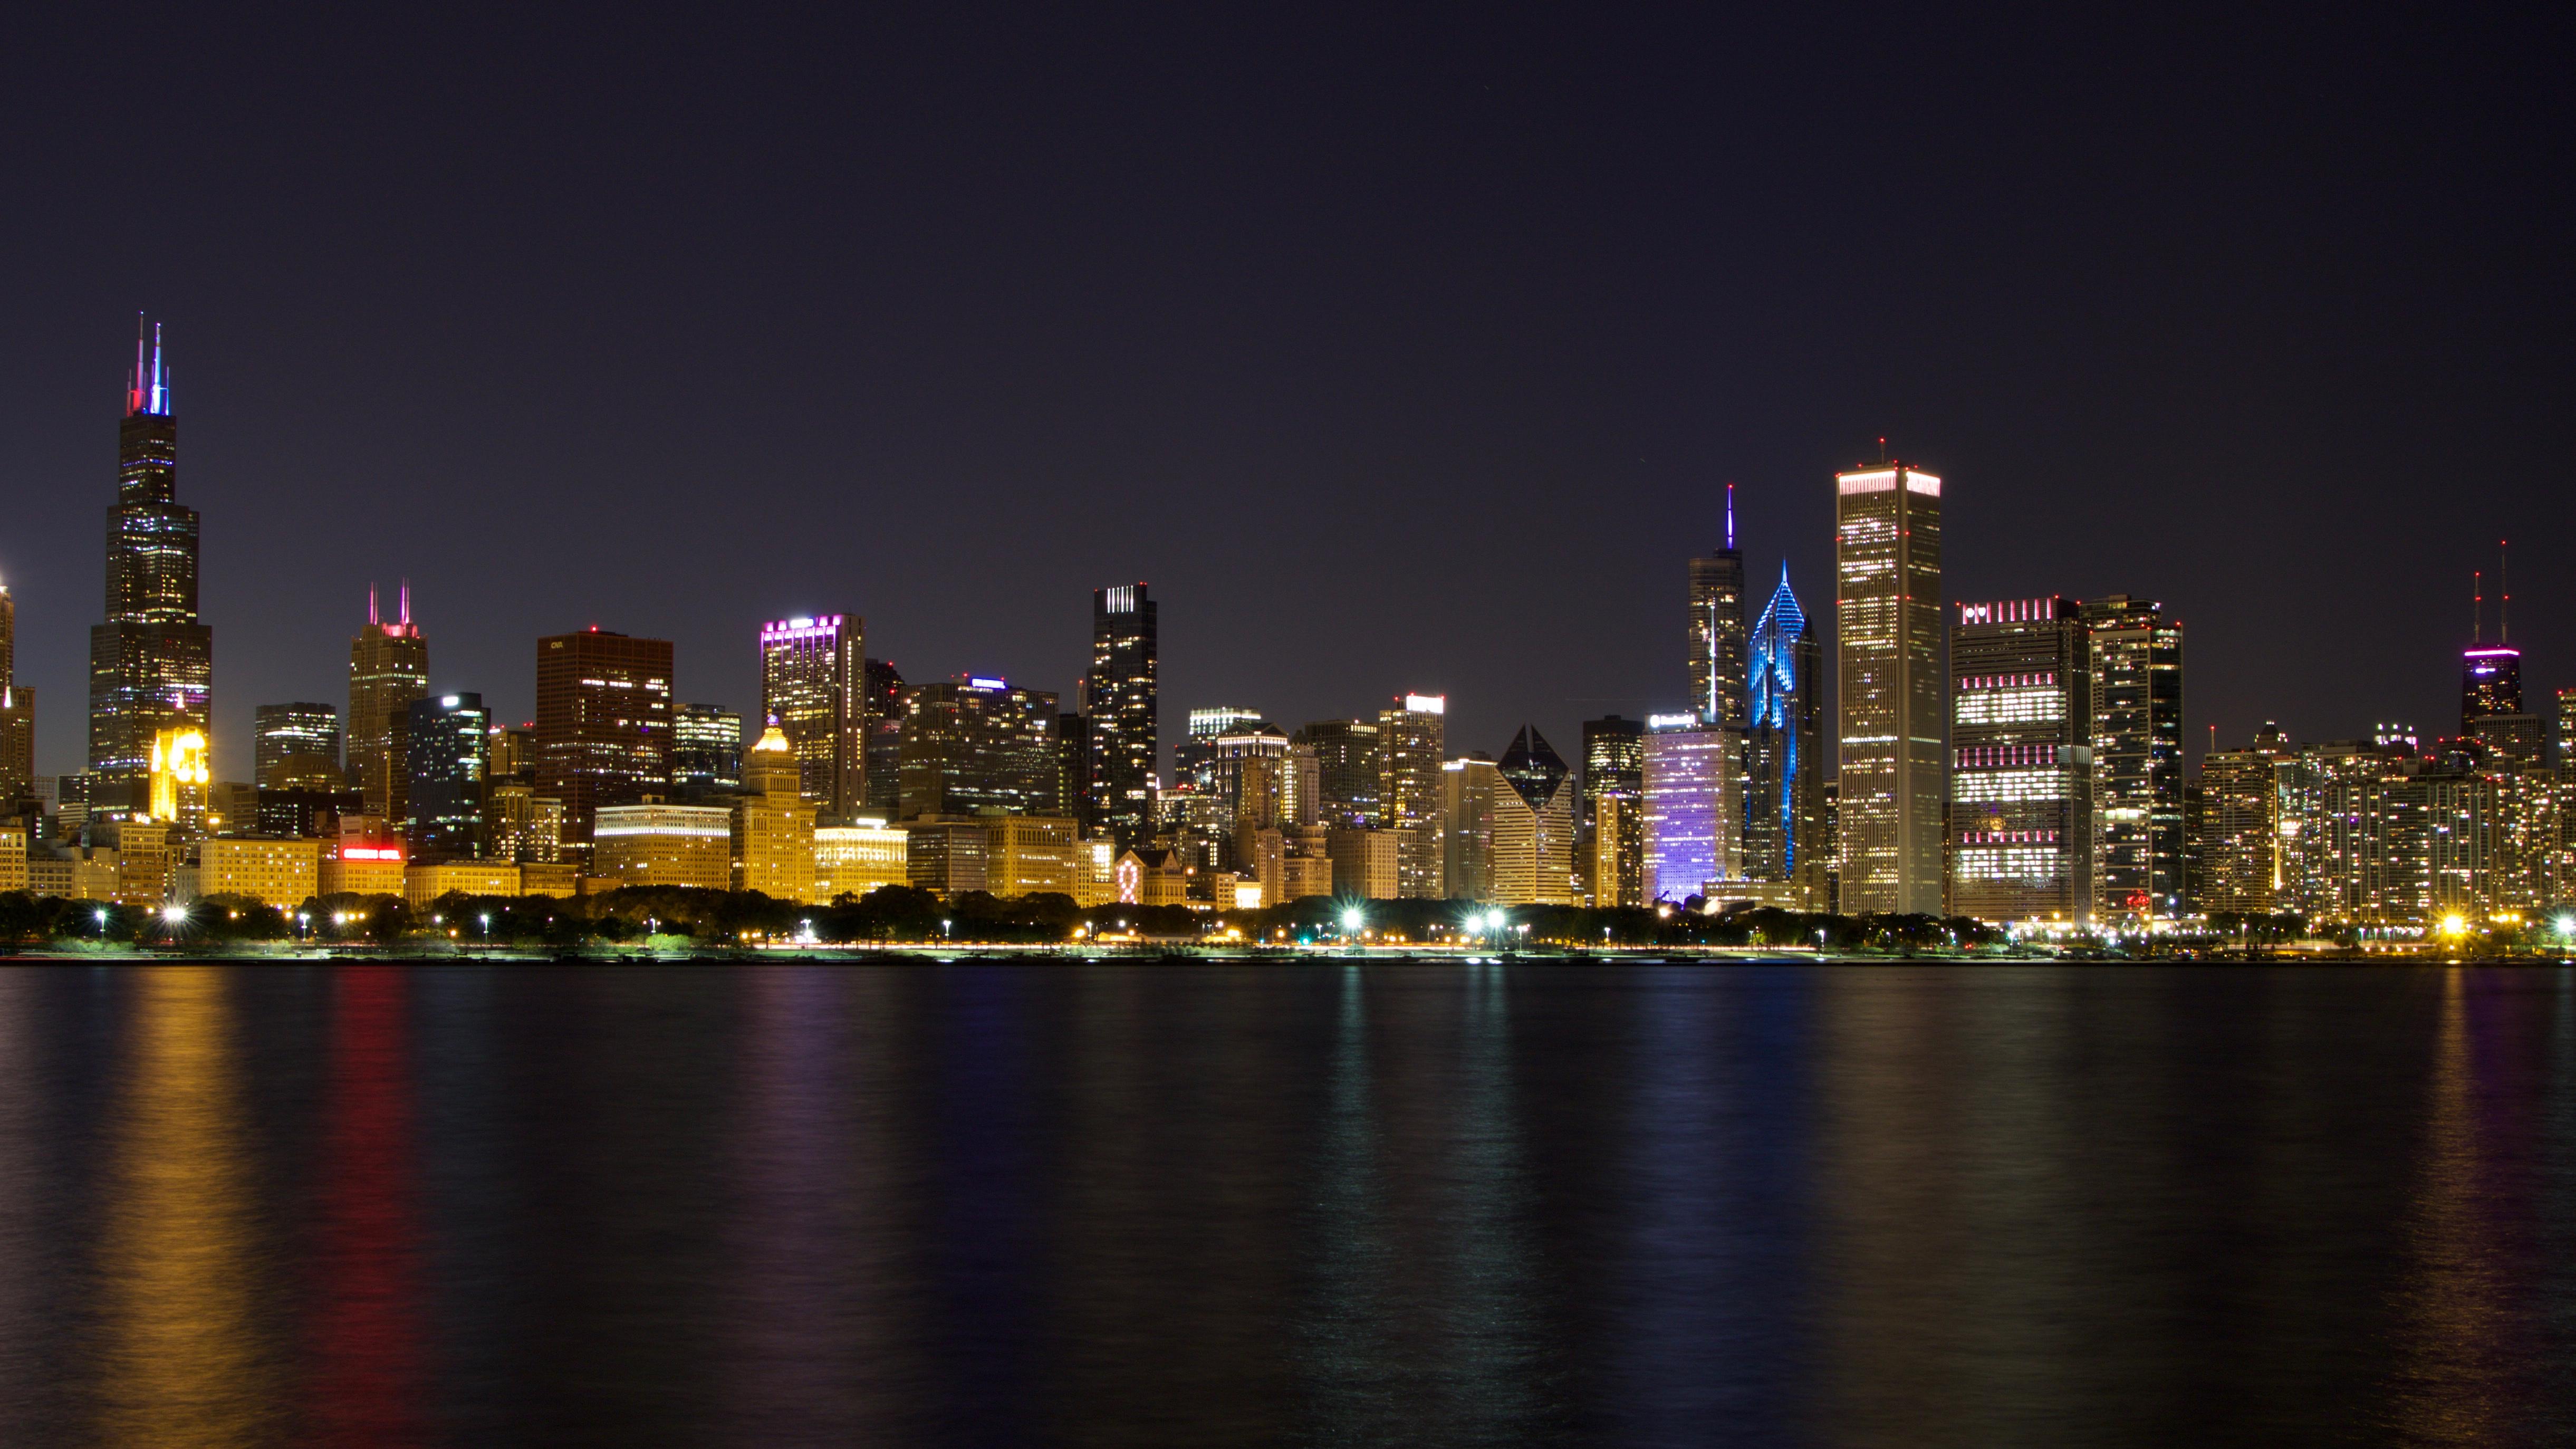 4884x2747] Chicago Skyline At Night [OC] R Wallpaper